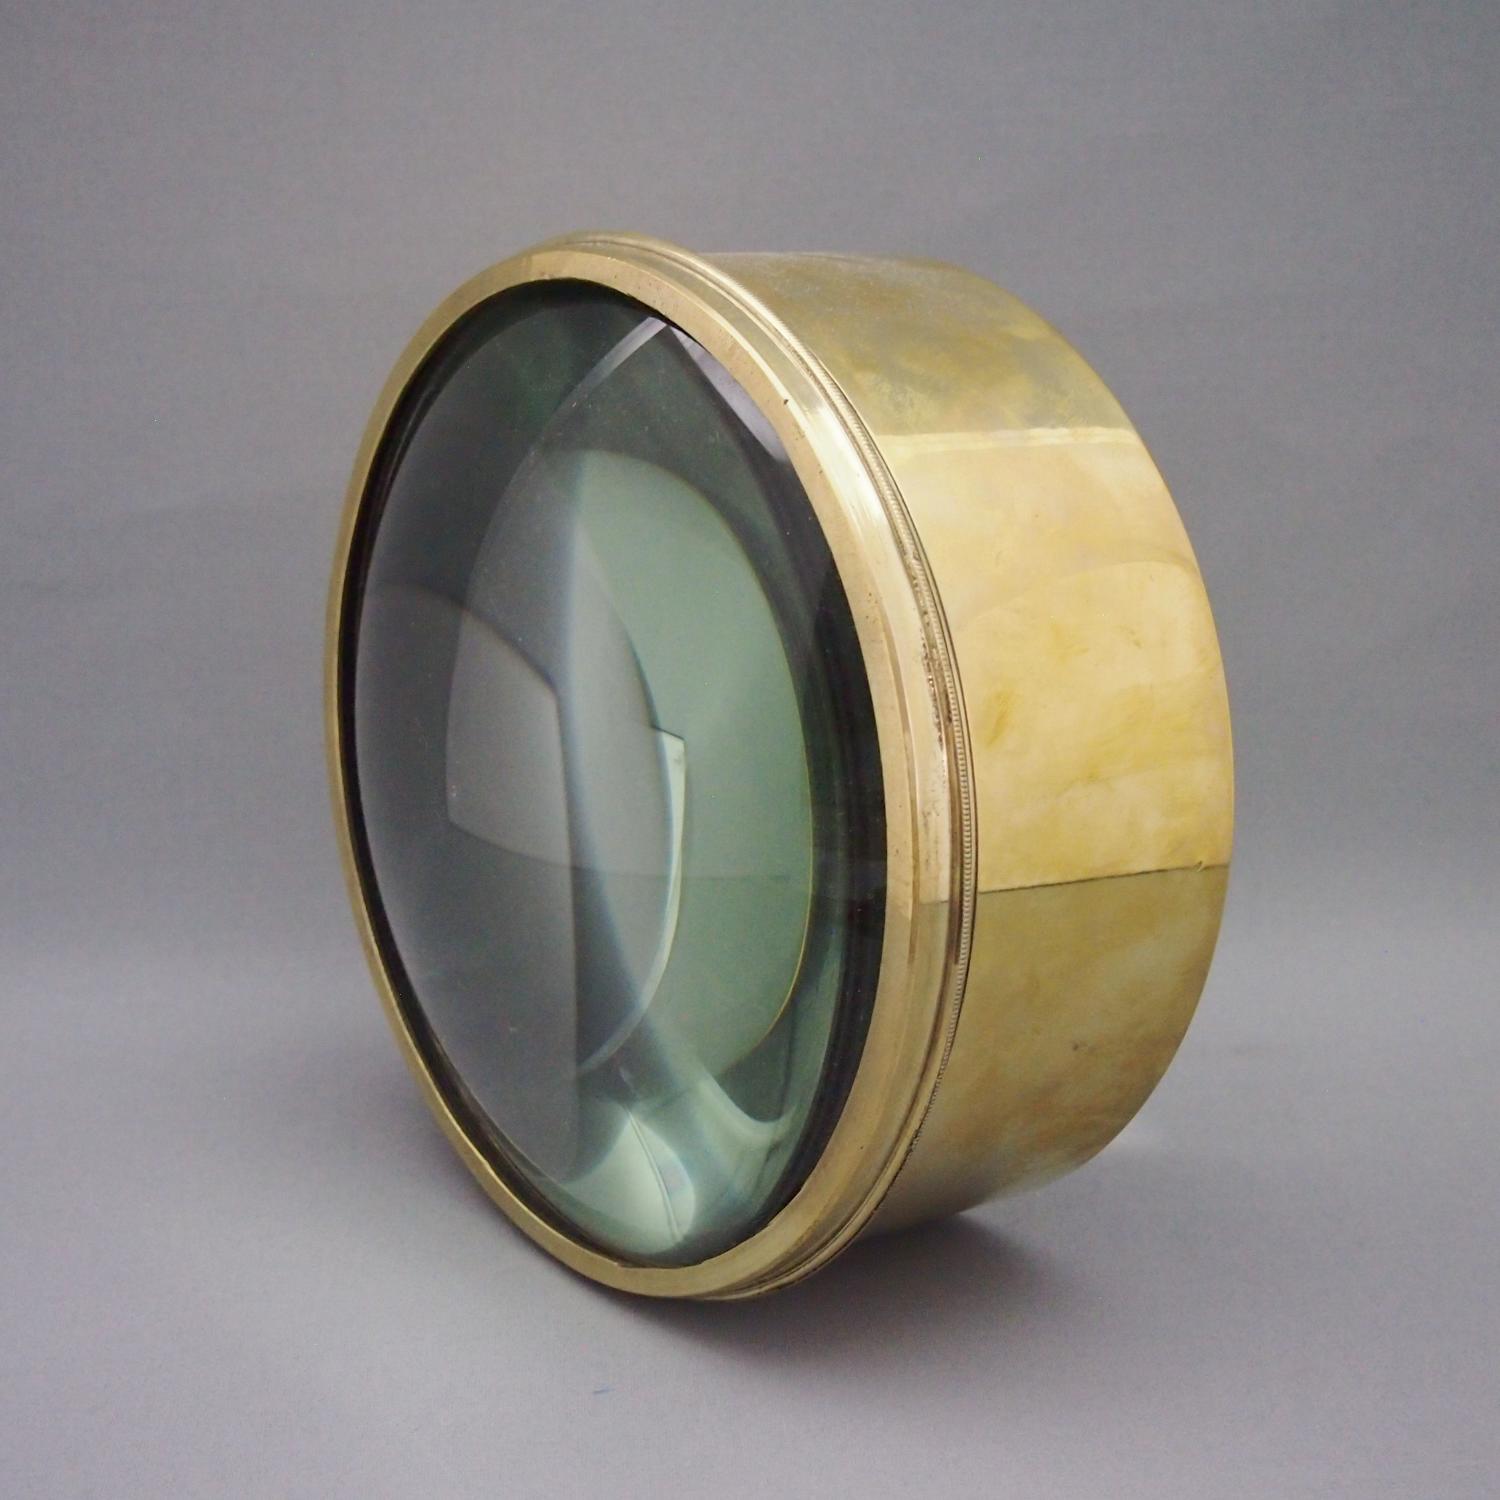 Large Brass Library Lens Magnifier Vintage C1910.